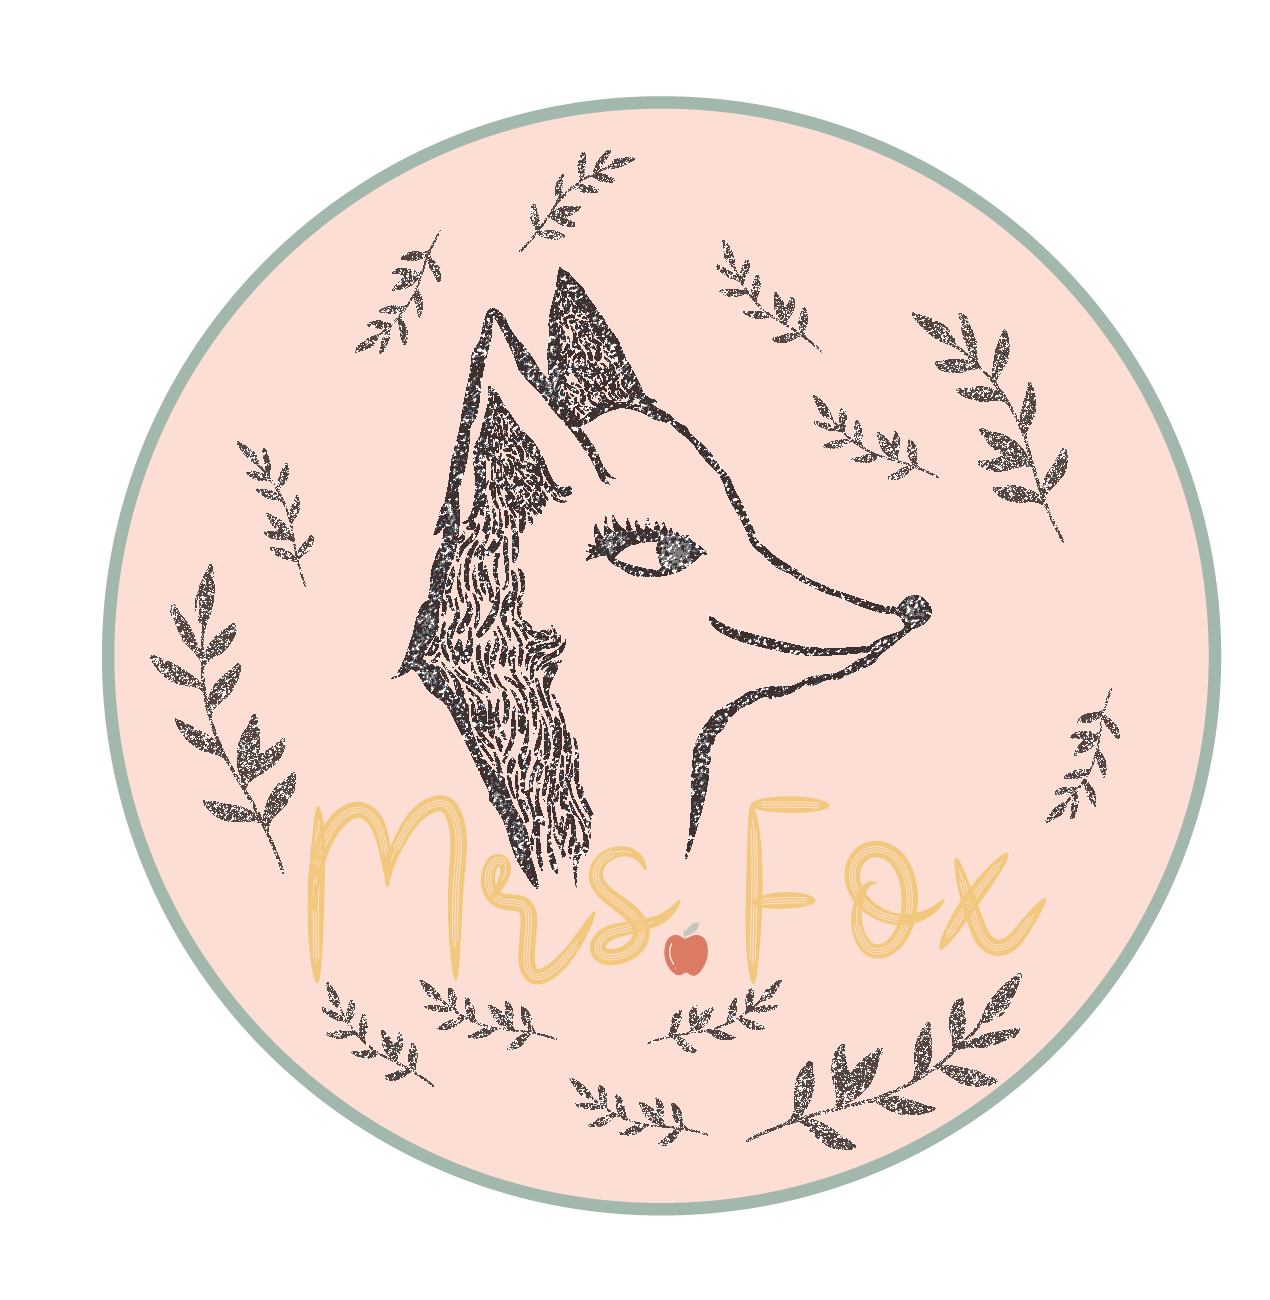 Mrs Fox